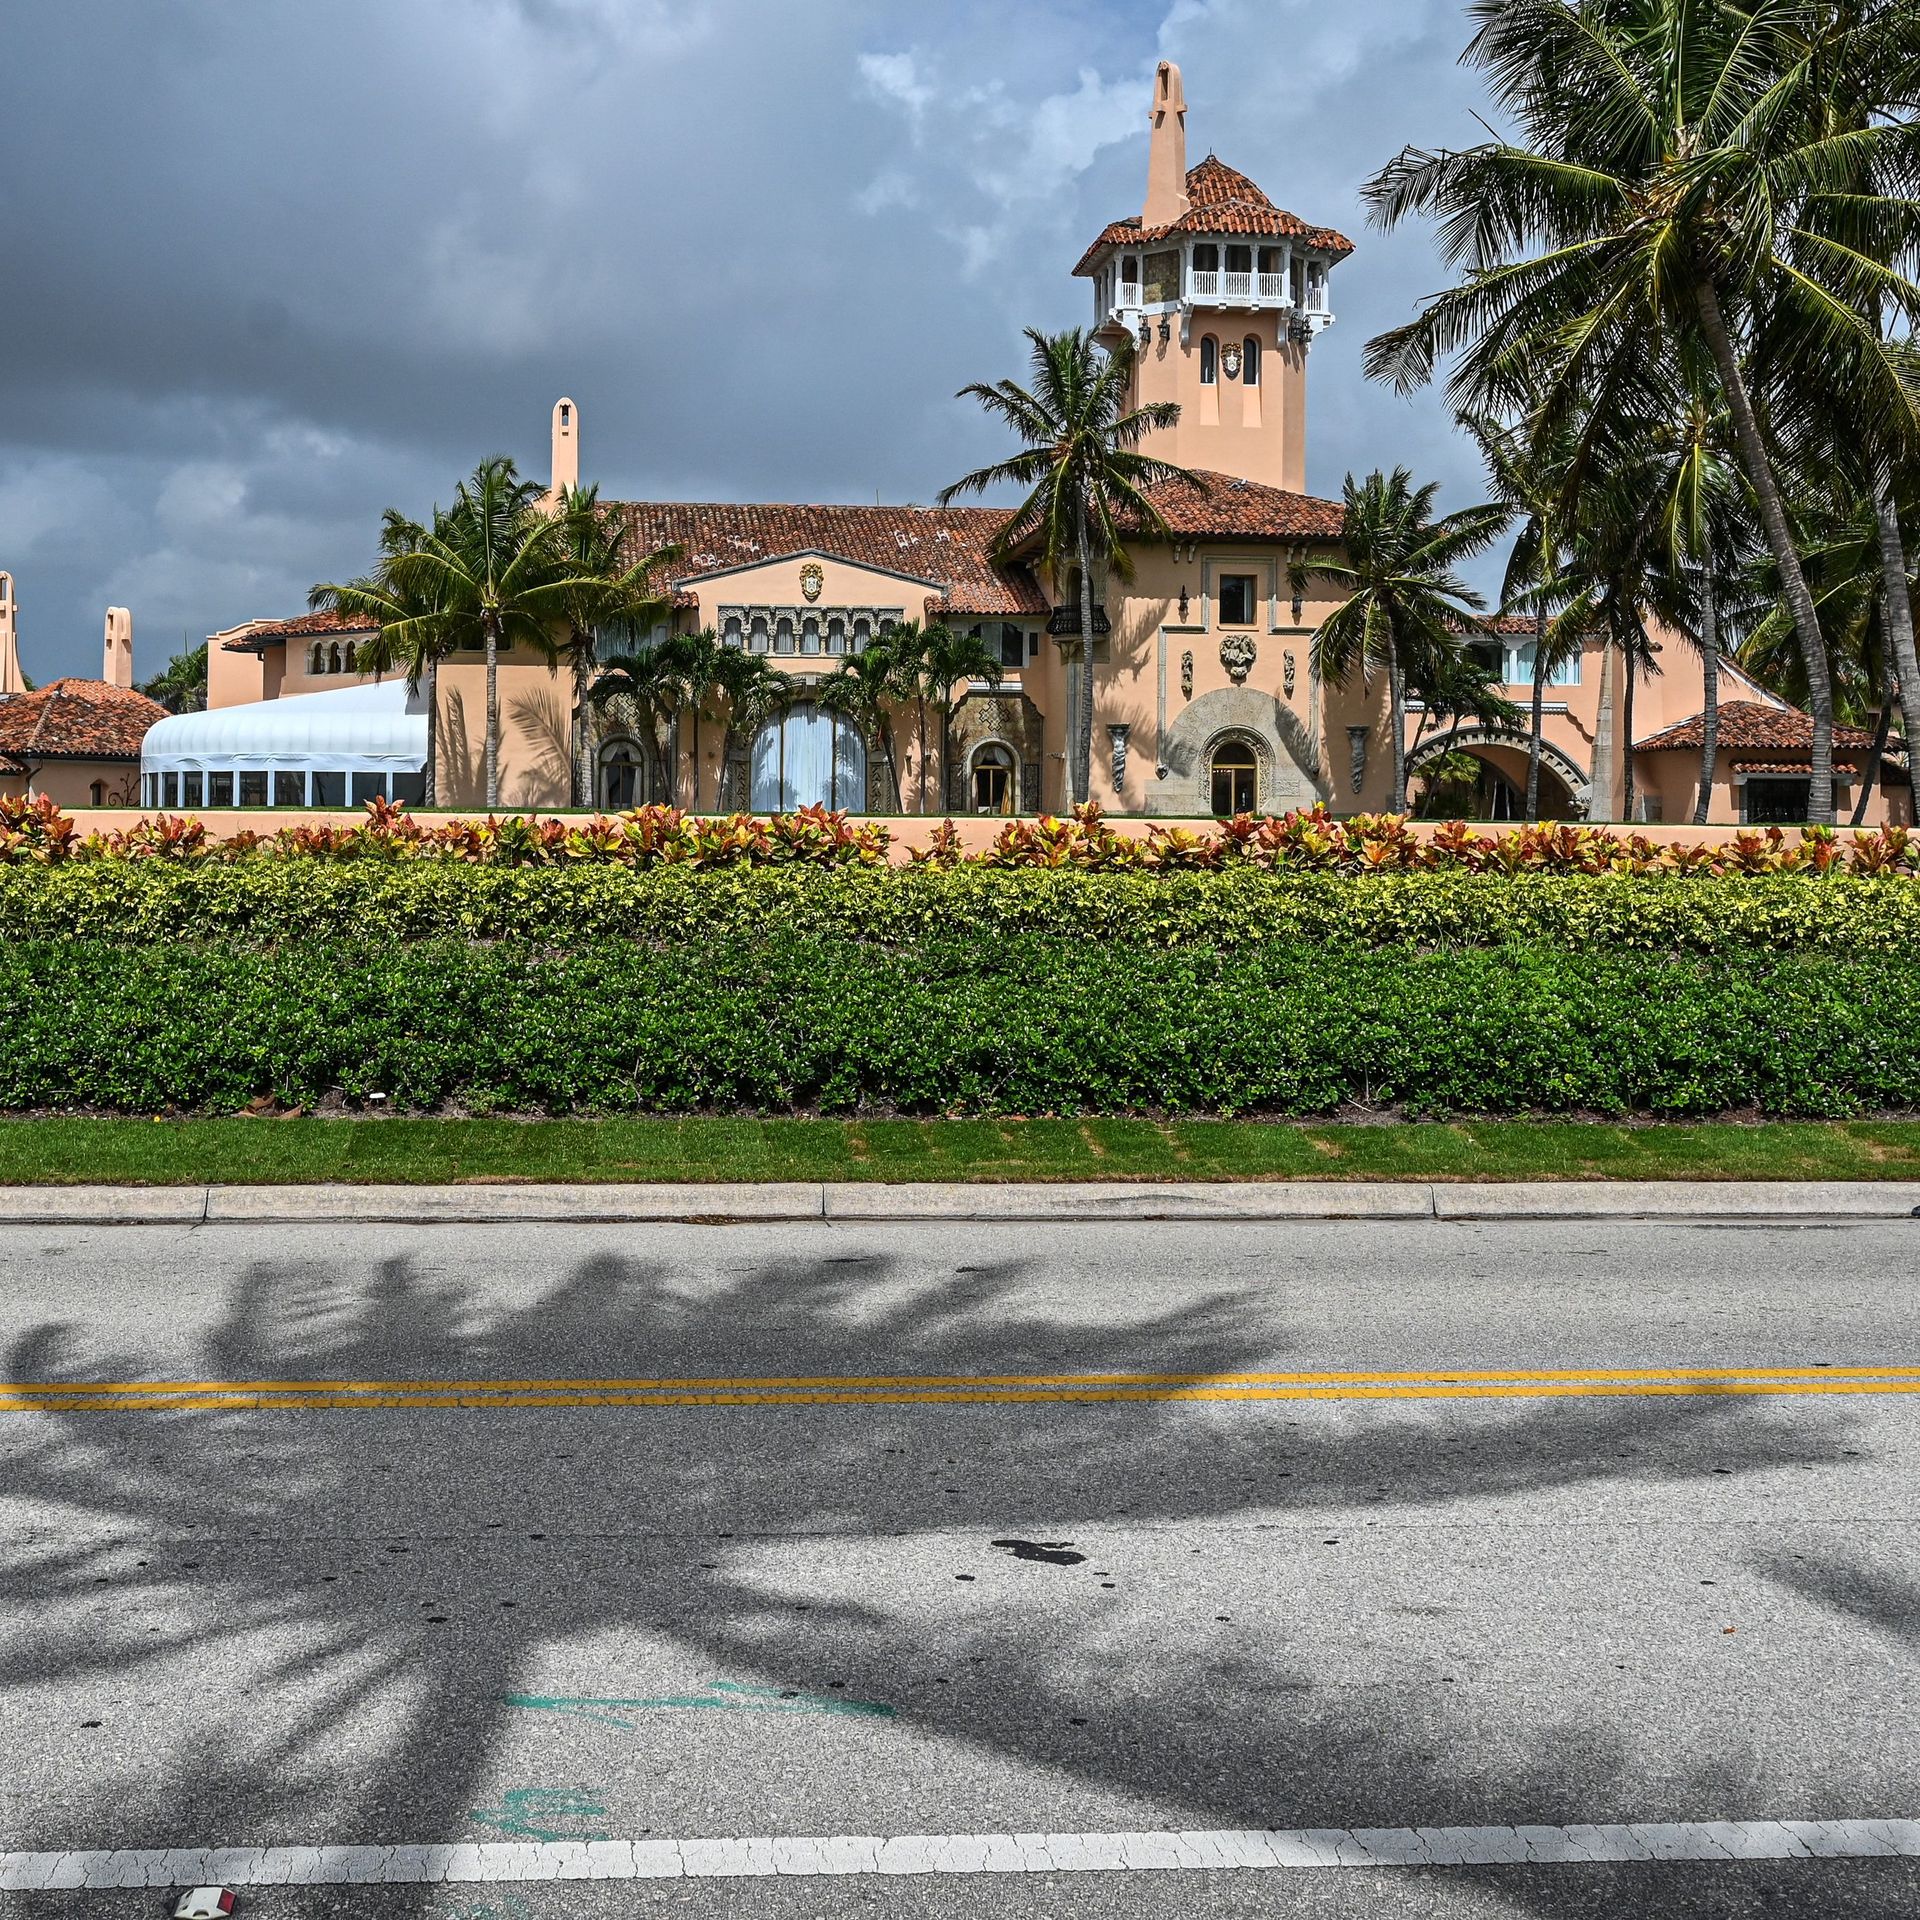 Former President Trump’s residence in Mar-A-Lago, Palm Beach, Florida on August 9, 2022.